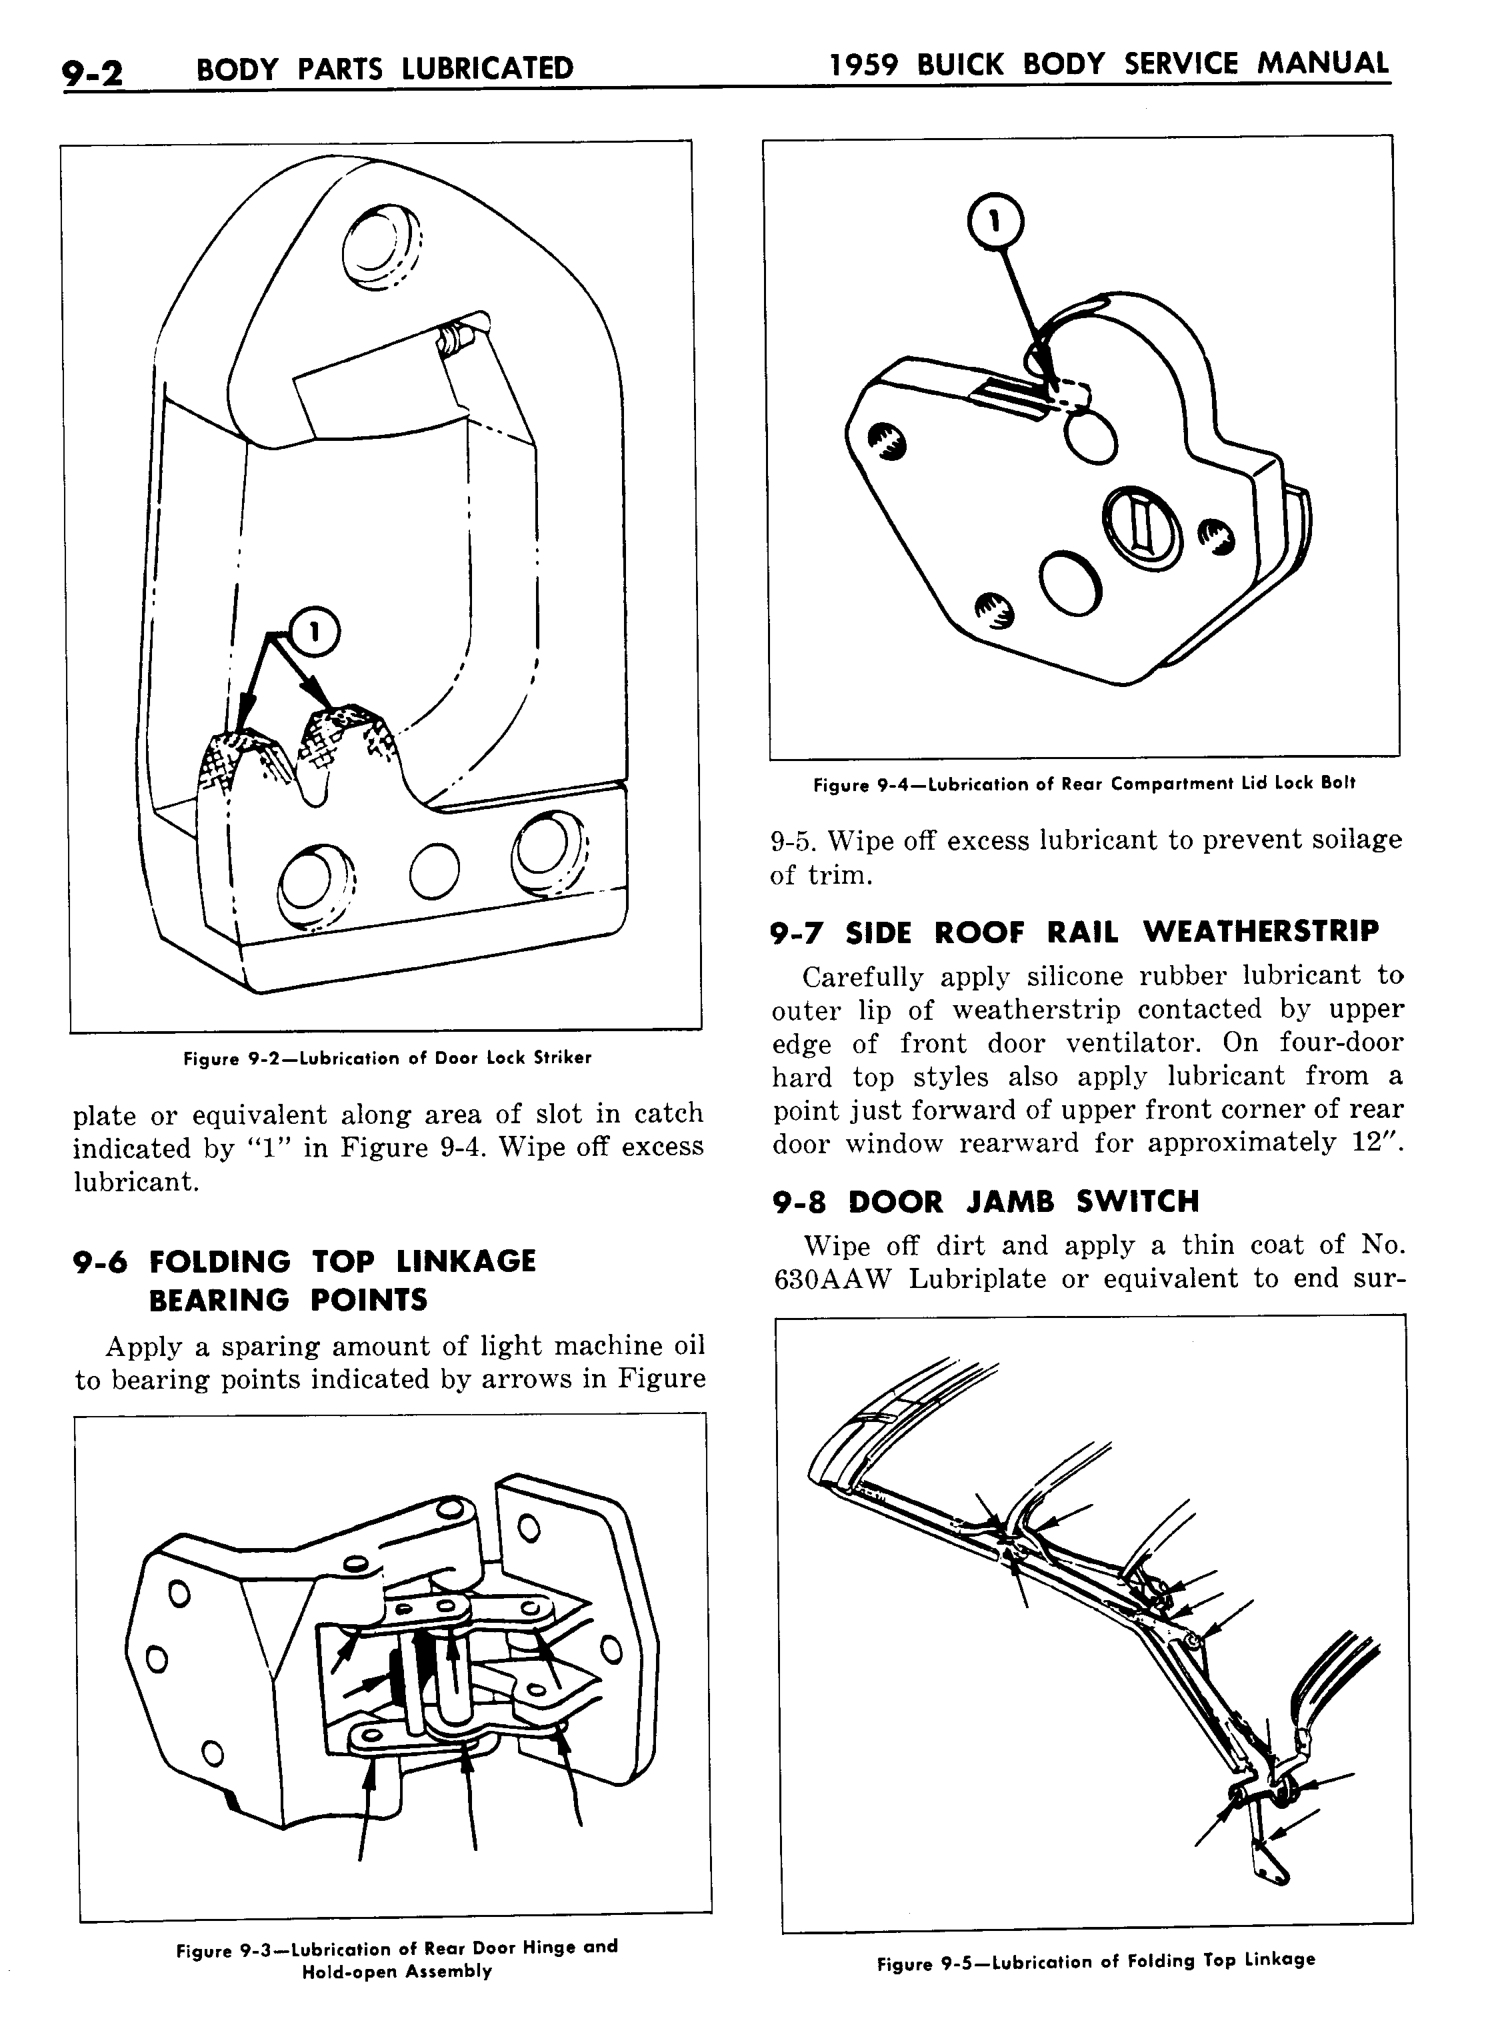 n_10 1959 Buick Body Service-Lubrication_2.jpg